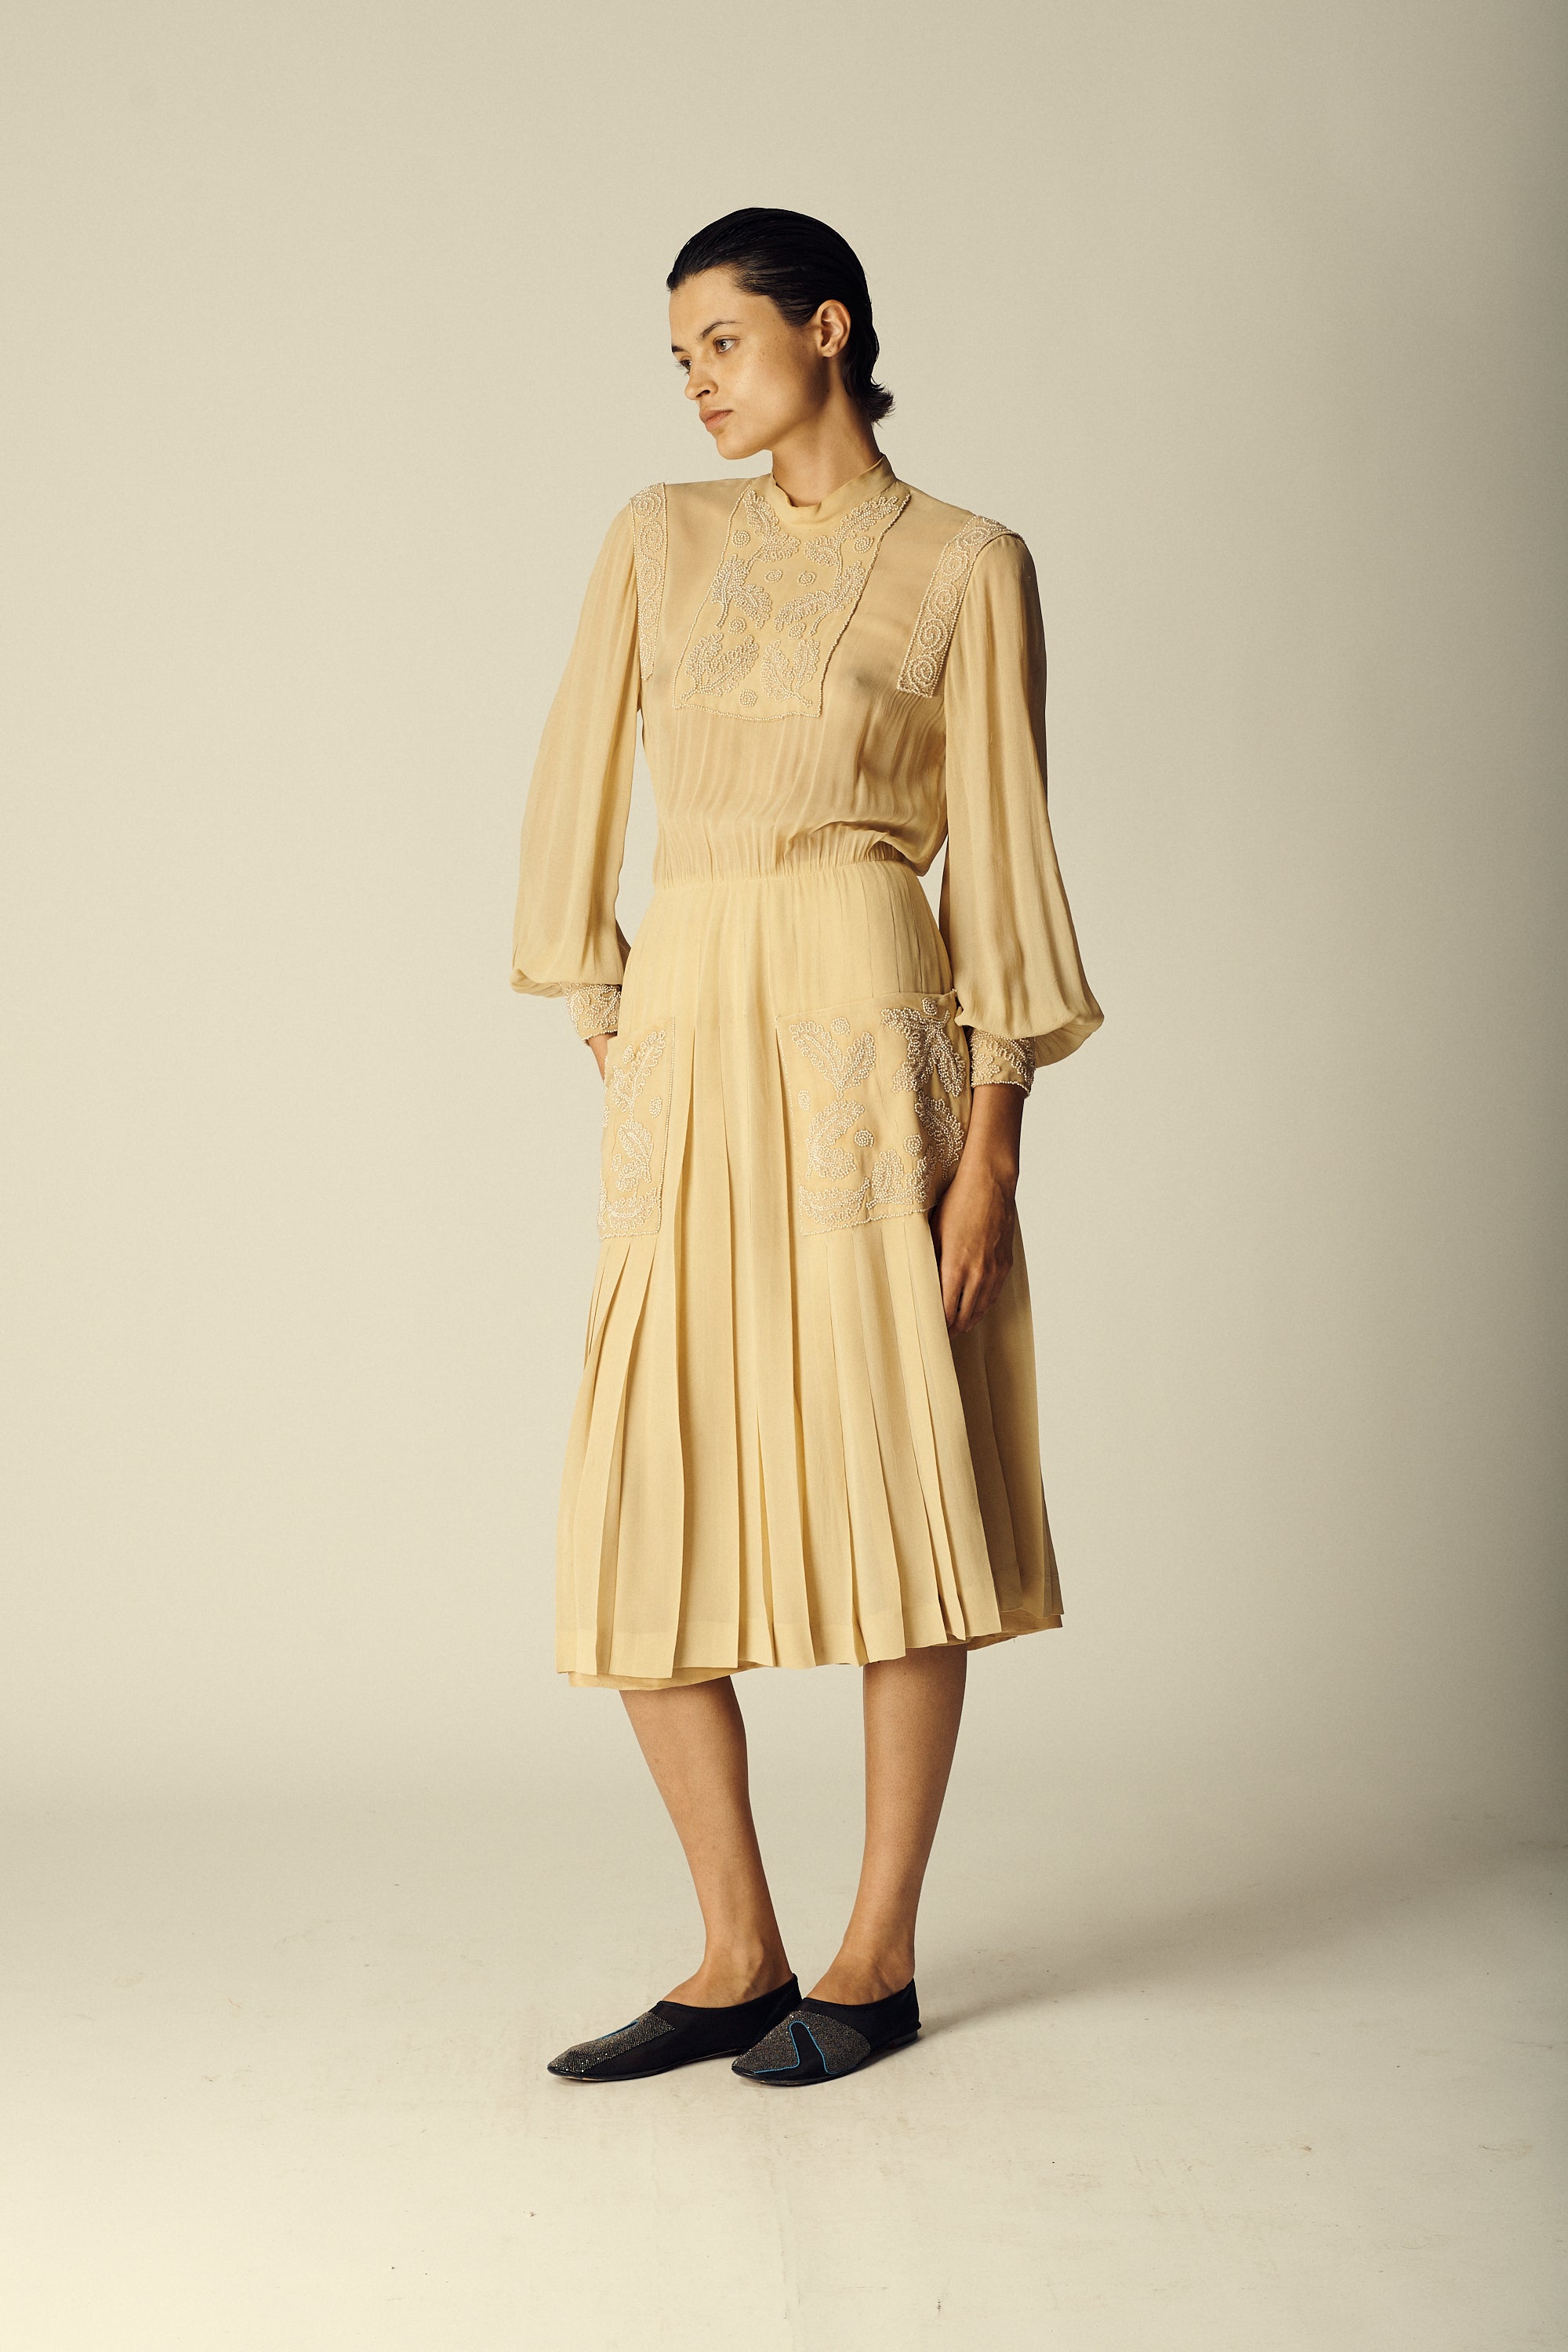 Chloé Beaded Chiffon Dress - Desert Vintage